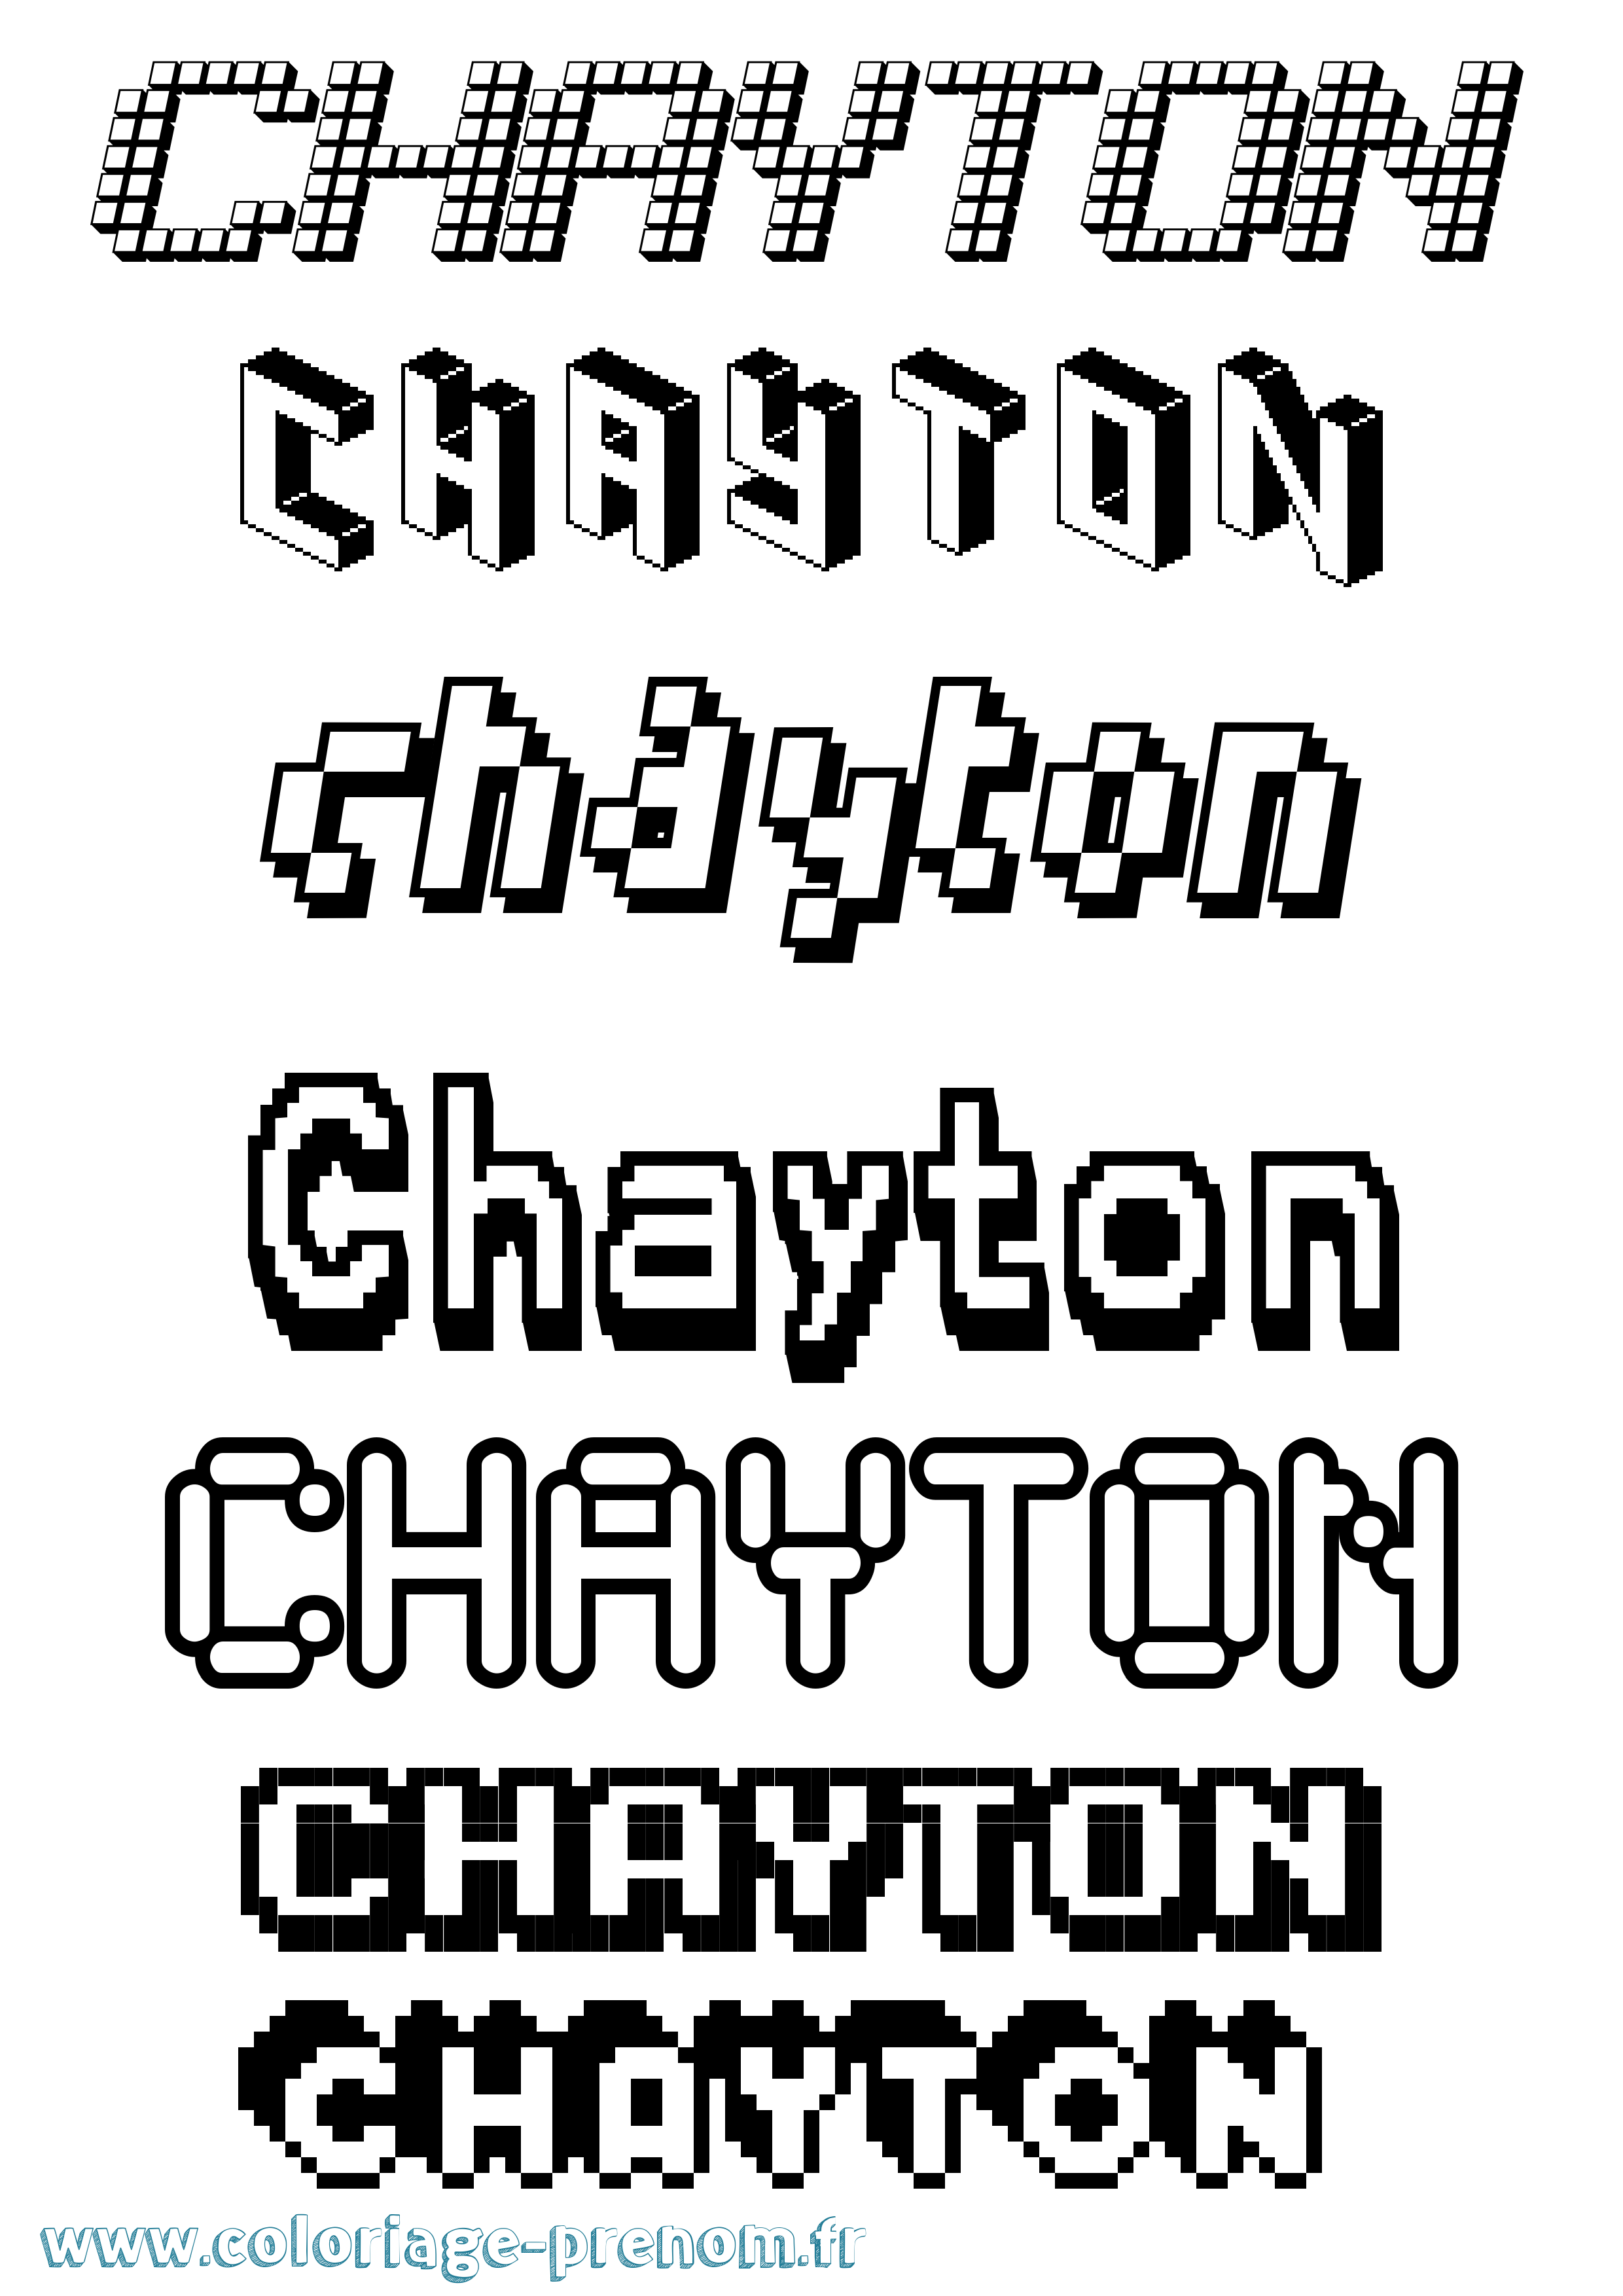 Coloriage prénom Chayton Pixel